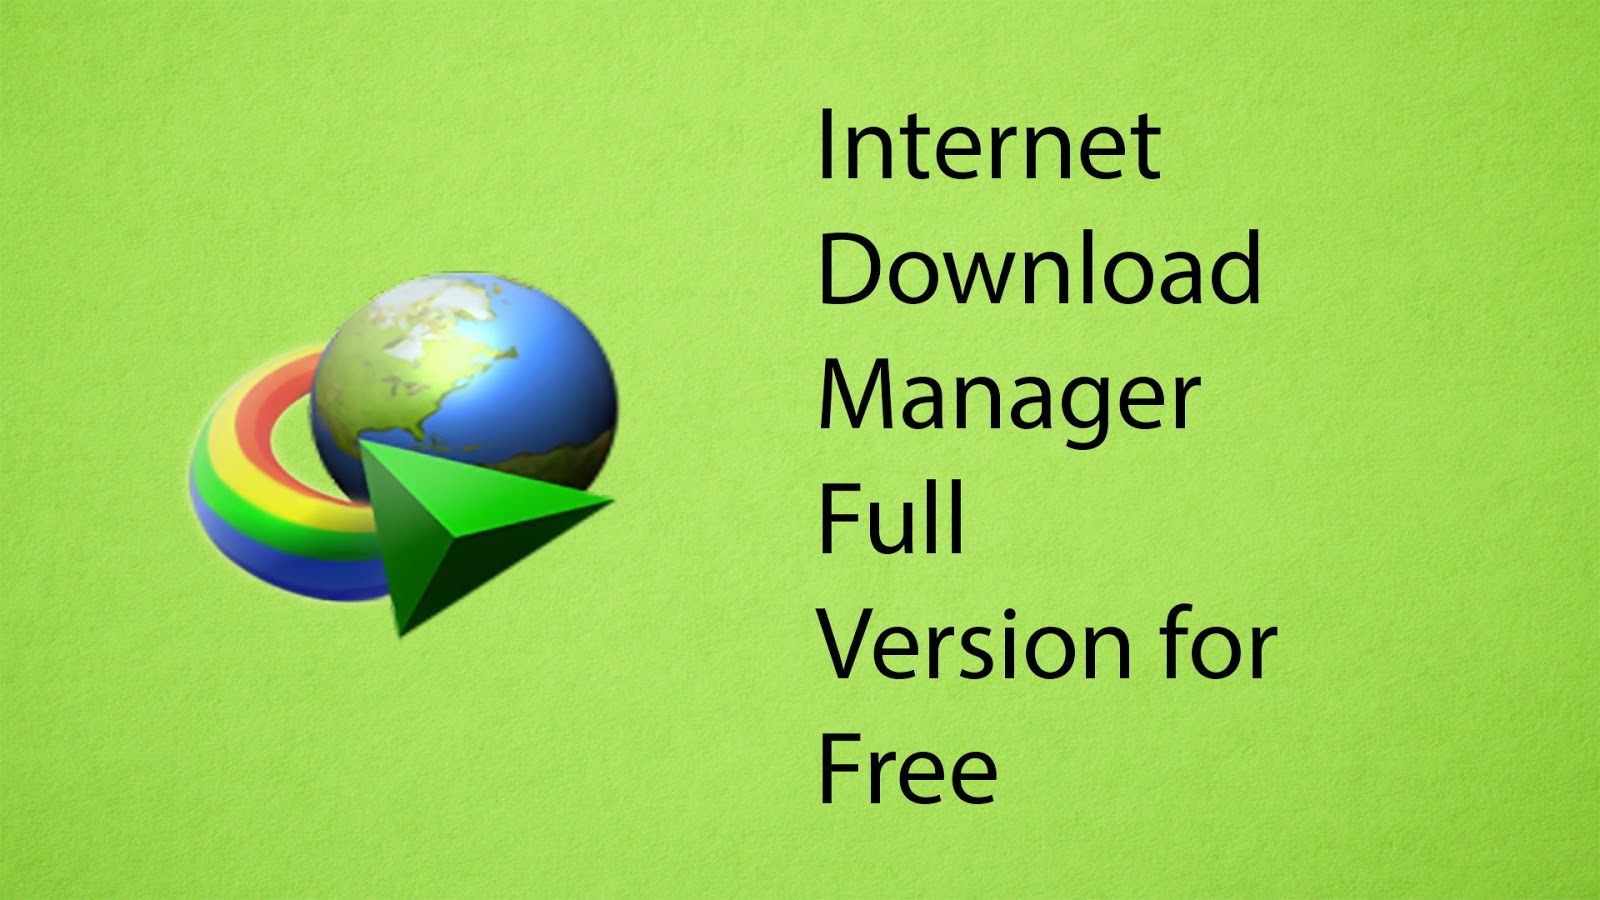 Internet Download Manager Full Version Free 2016